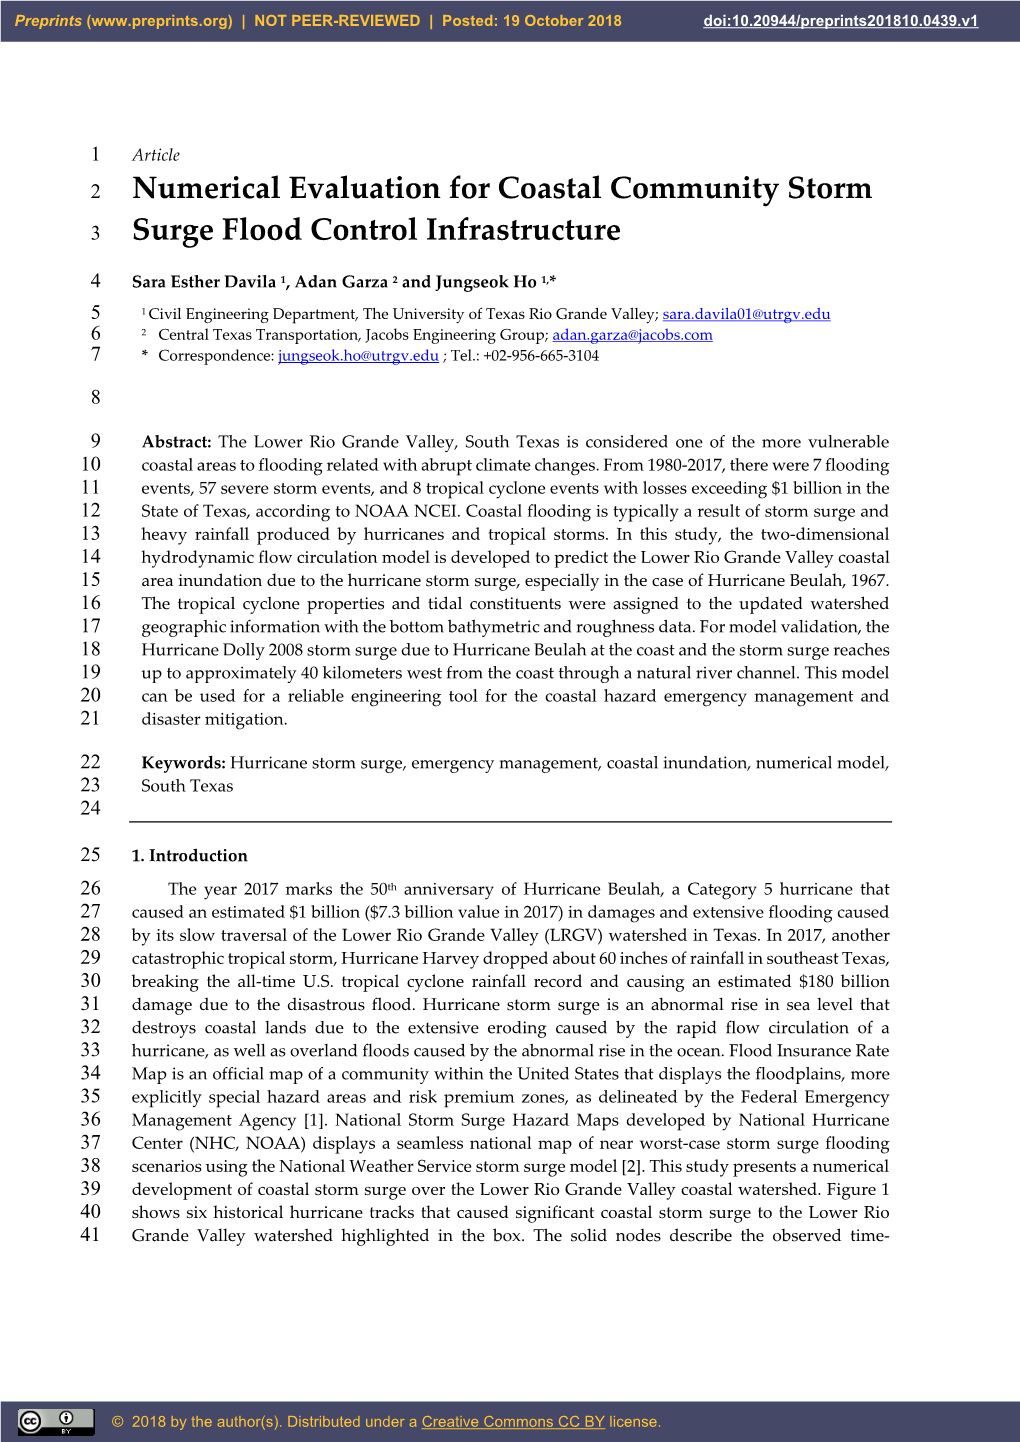 Numerical Evaluation for Coastal Community Storm Surge Flood